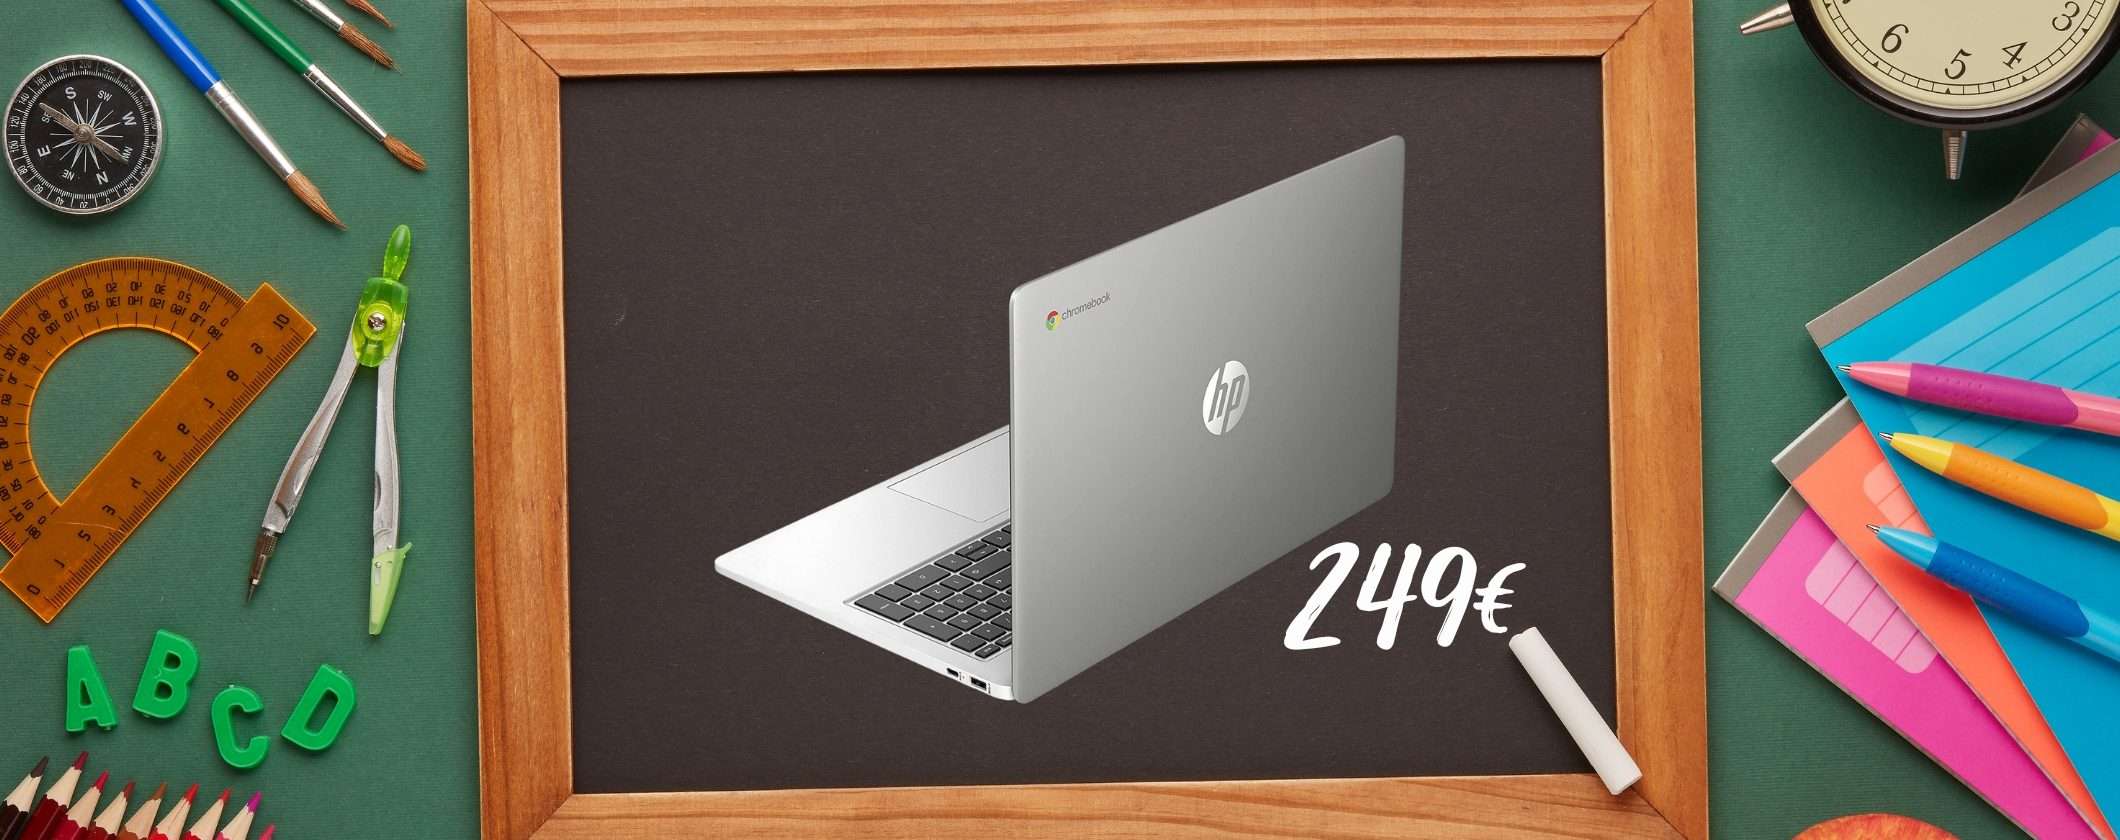 HP Chromebook: portatile sempre veloce a 249€ al Prime Day